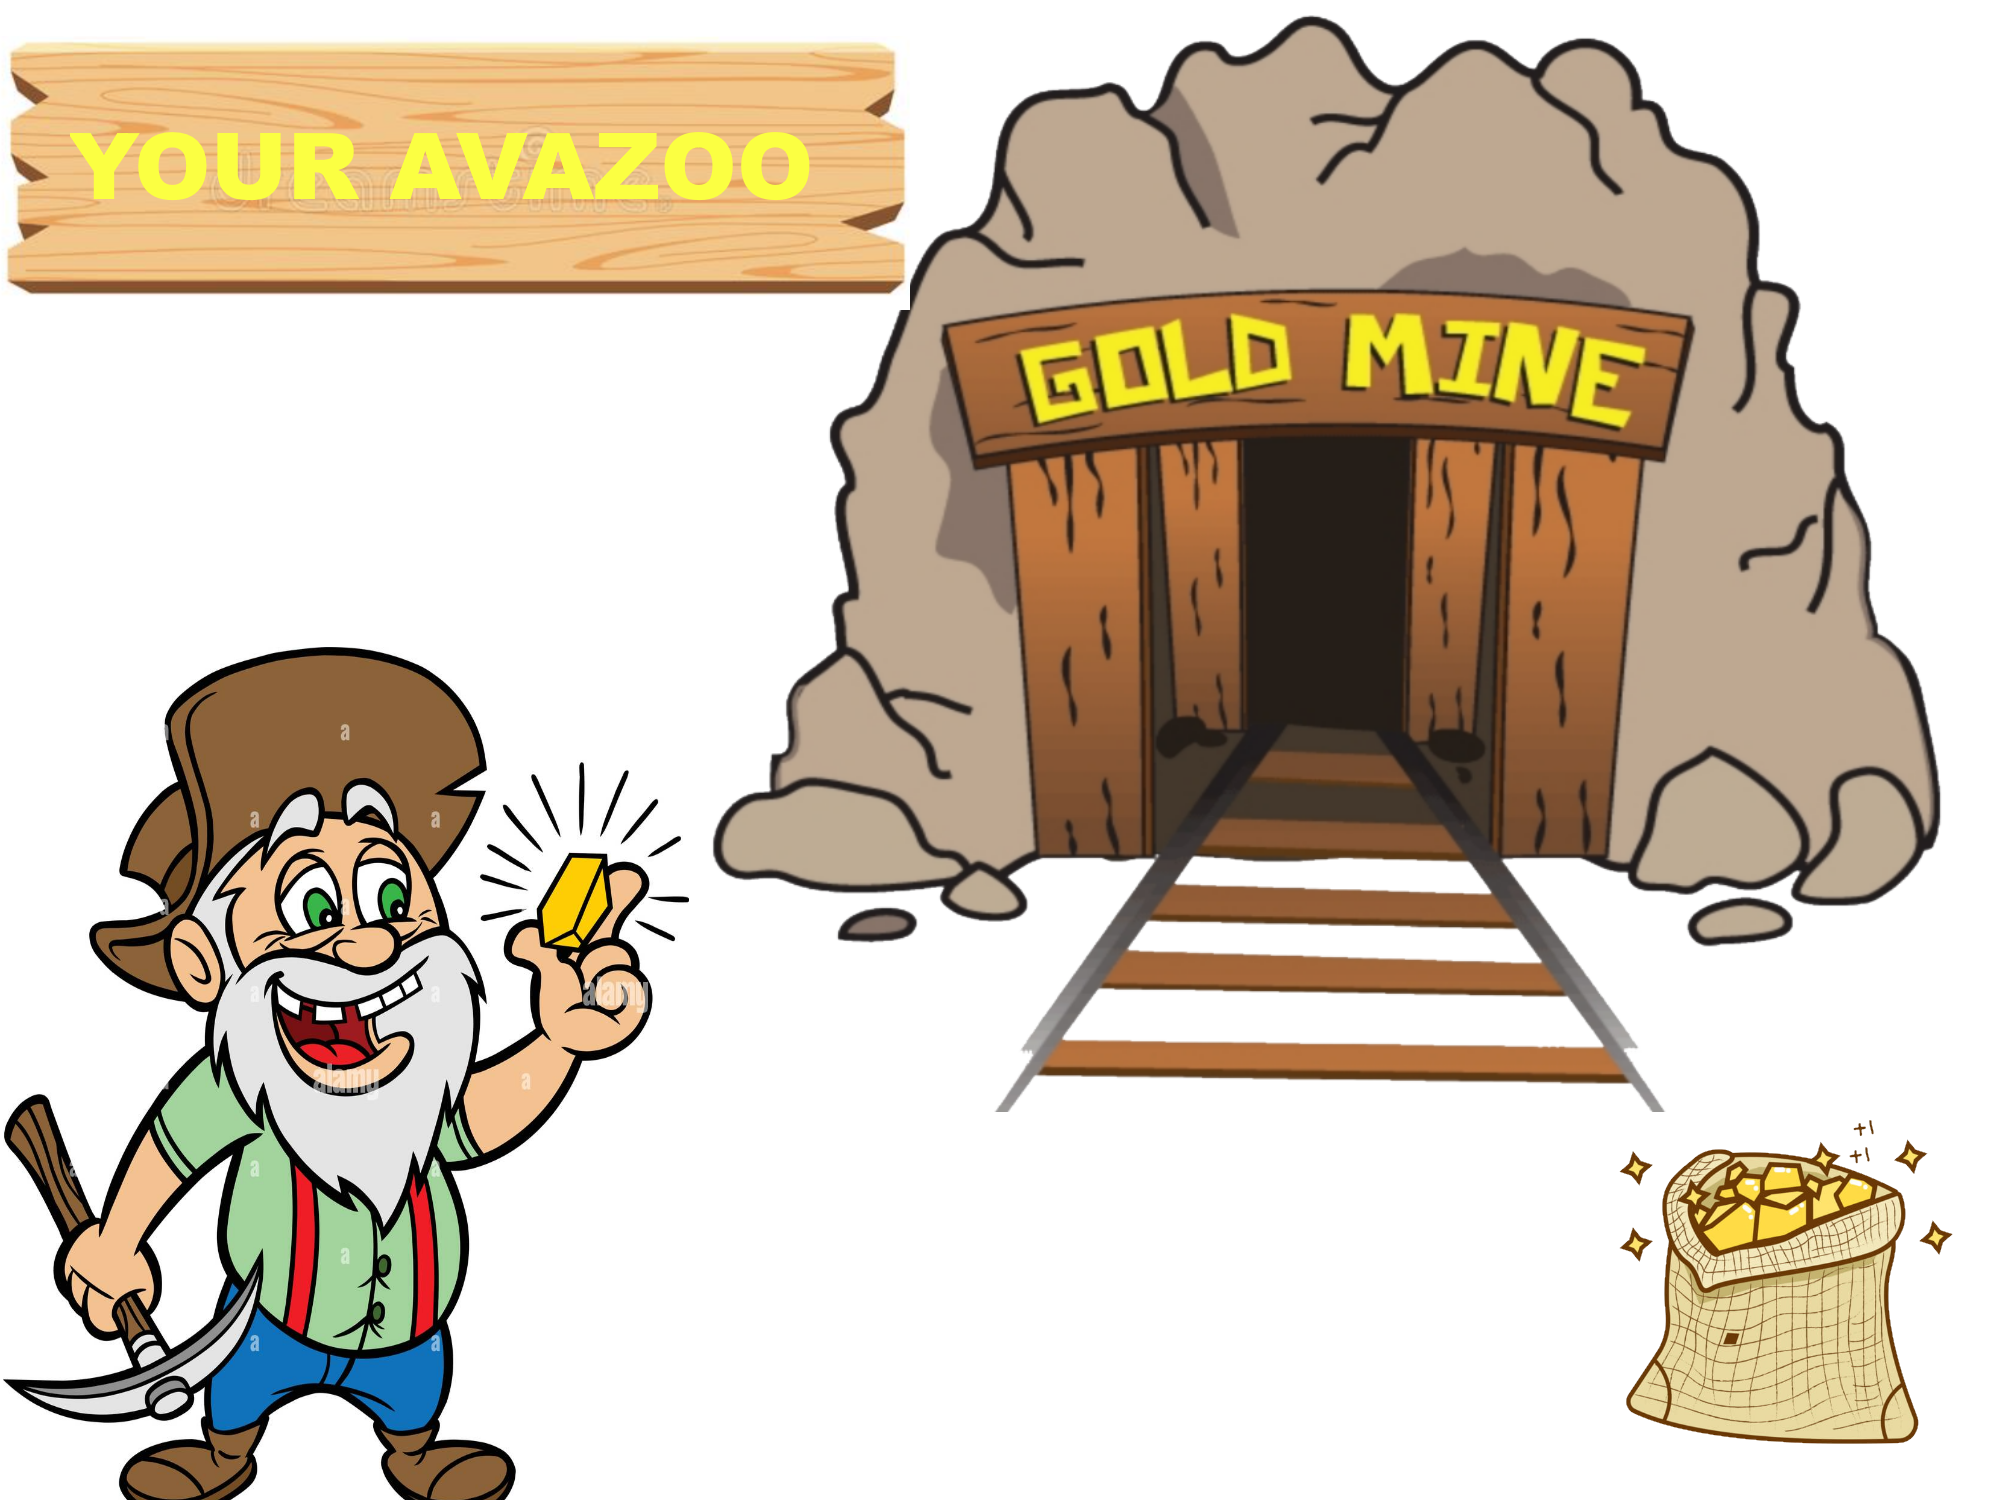 Your Avazoo Goldmine